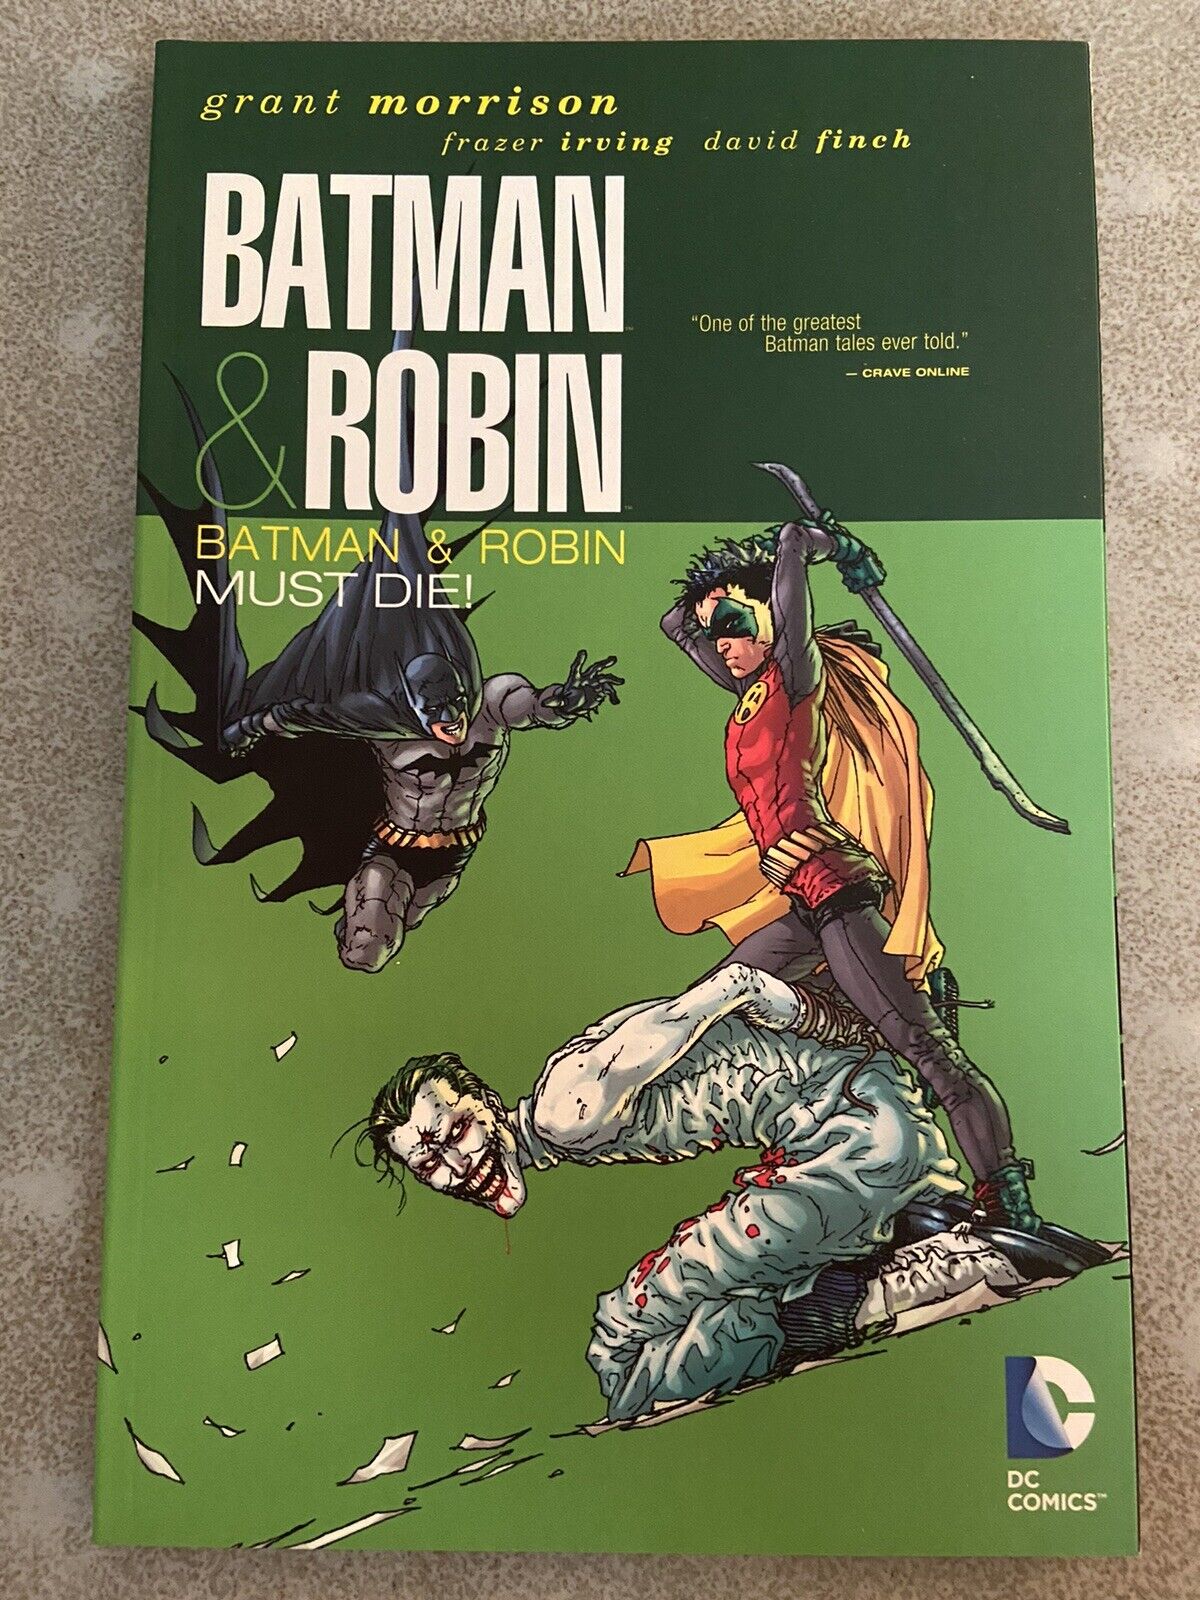 Batman & Robin Vol 3 Must Die Grant Morrison TPB Graphic Novel Trade Paperback